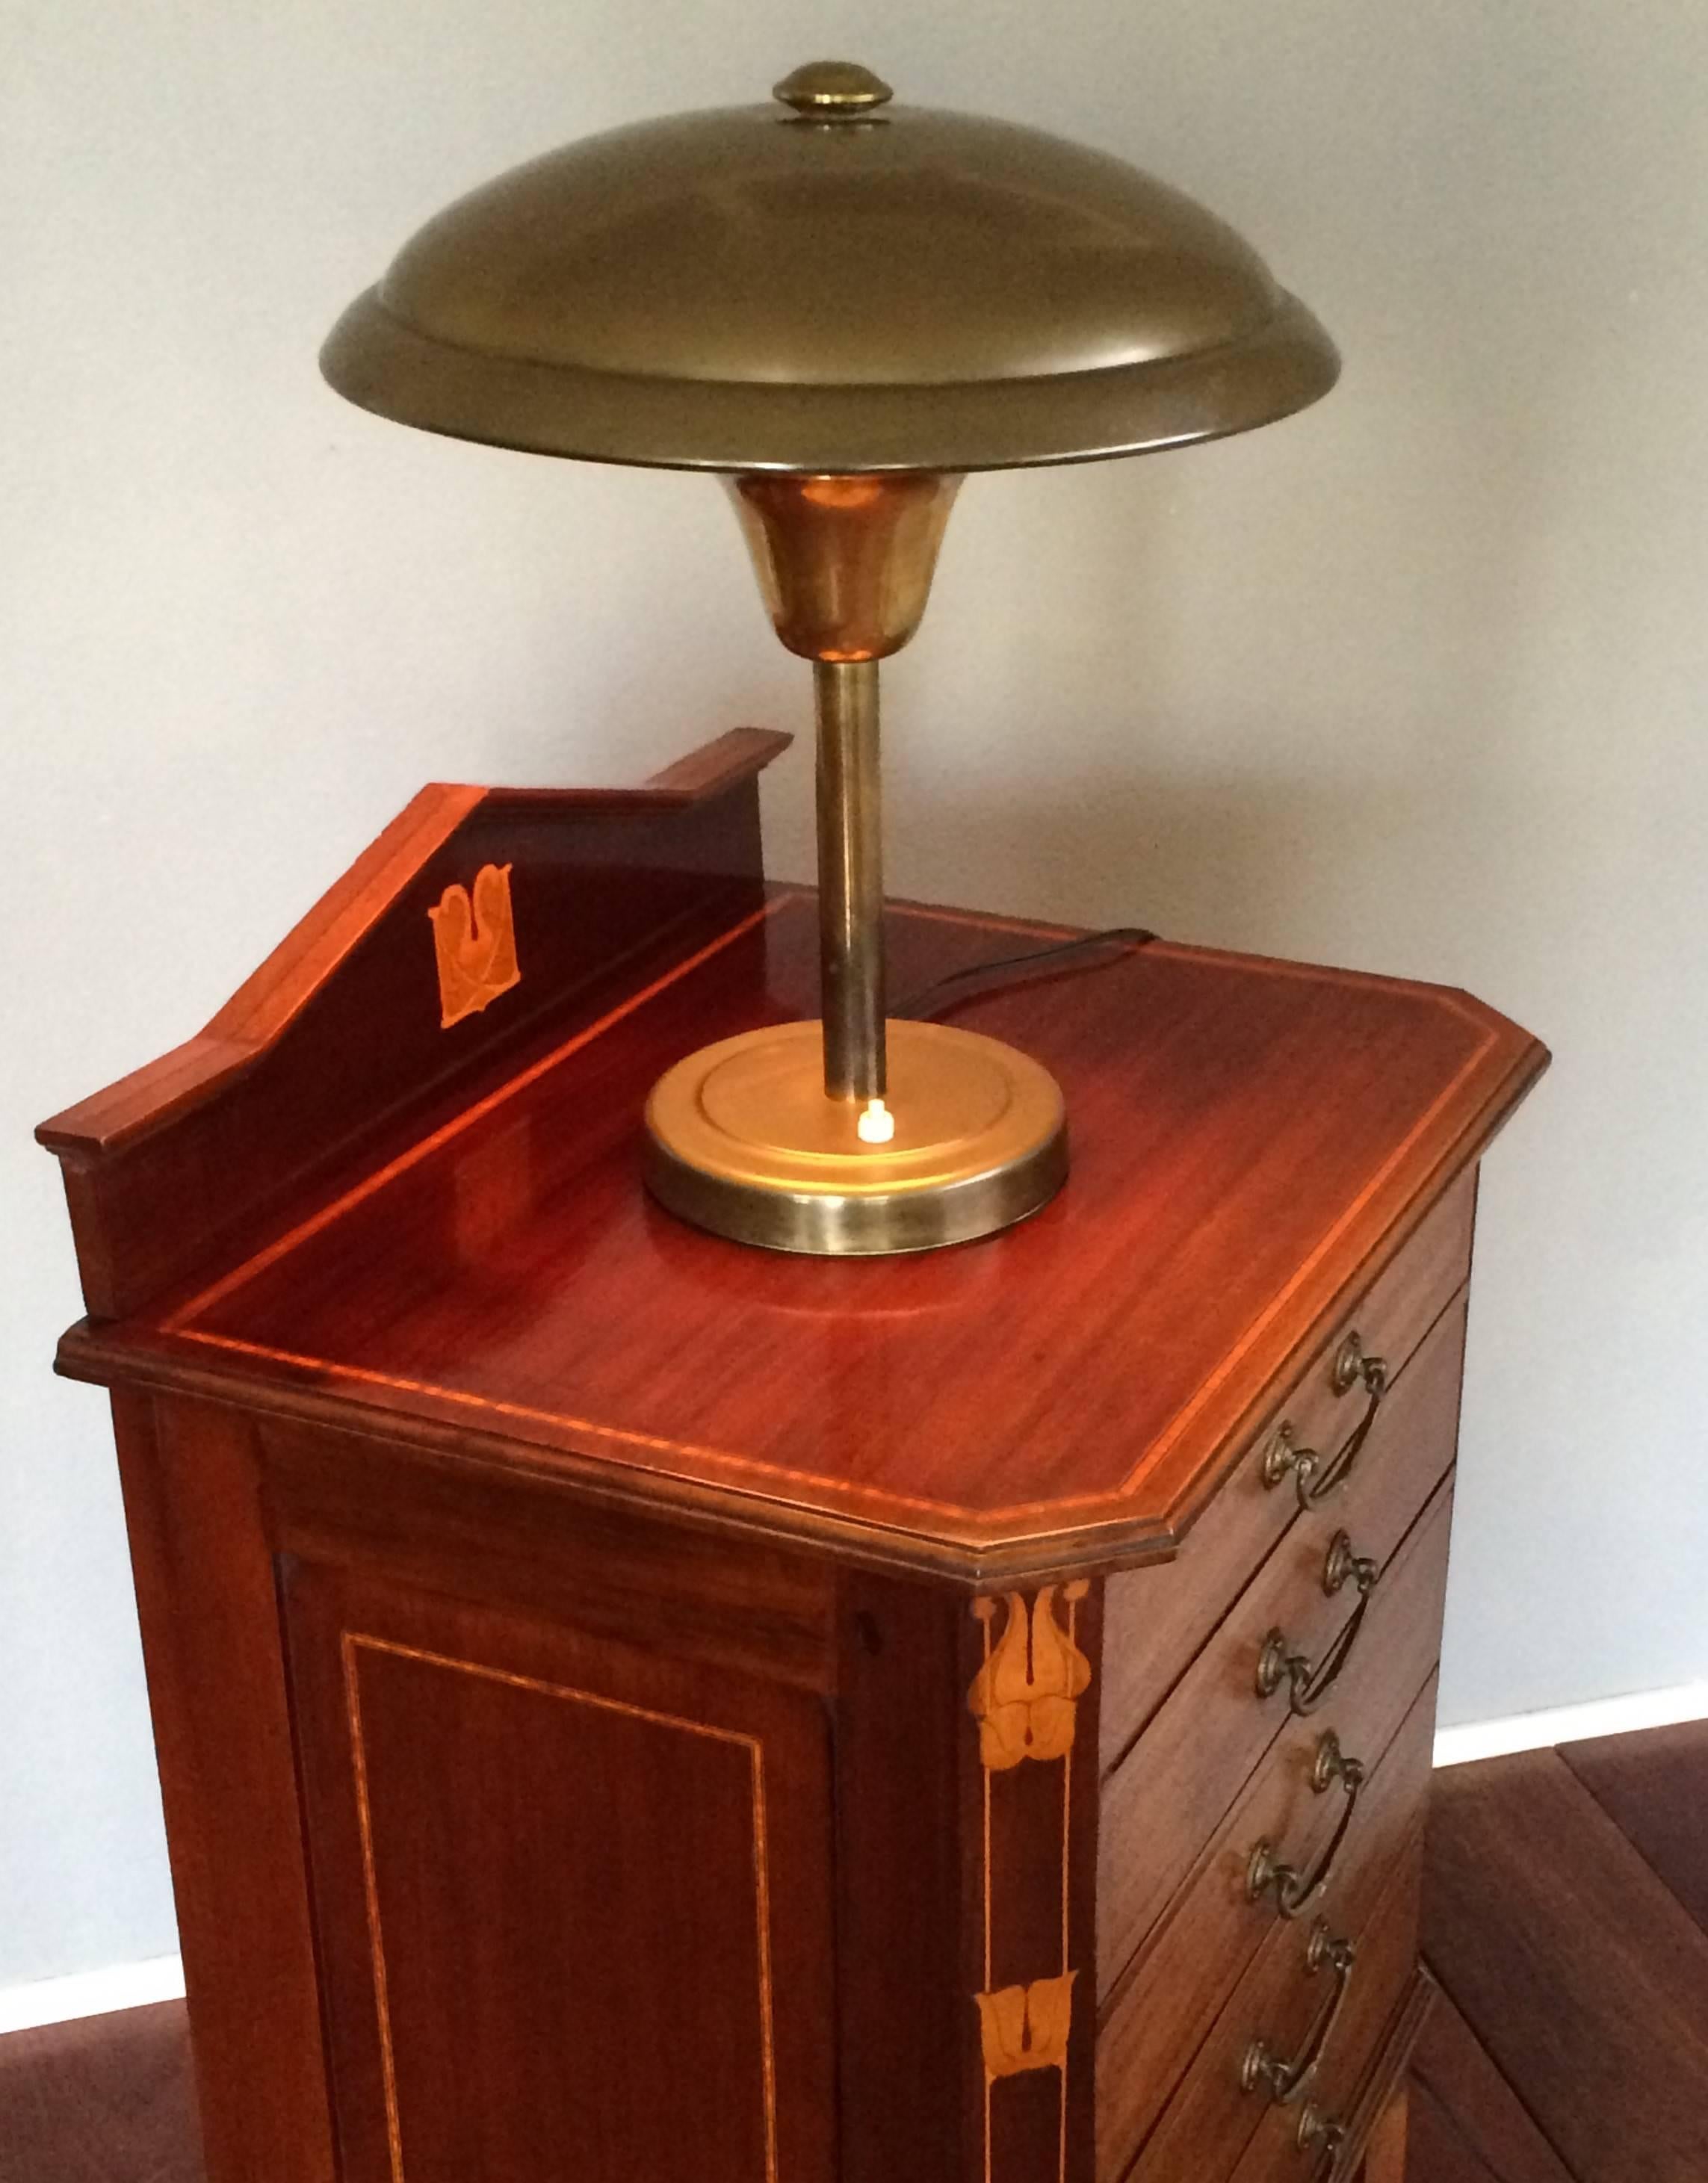 German Art Deco Bauhaus Style Table or Desk Lamp, Copper Metal Dish Design Lamp Shade For Sale